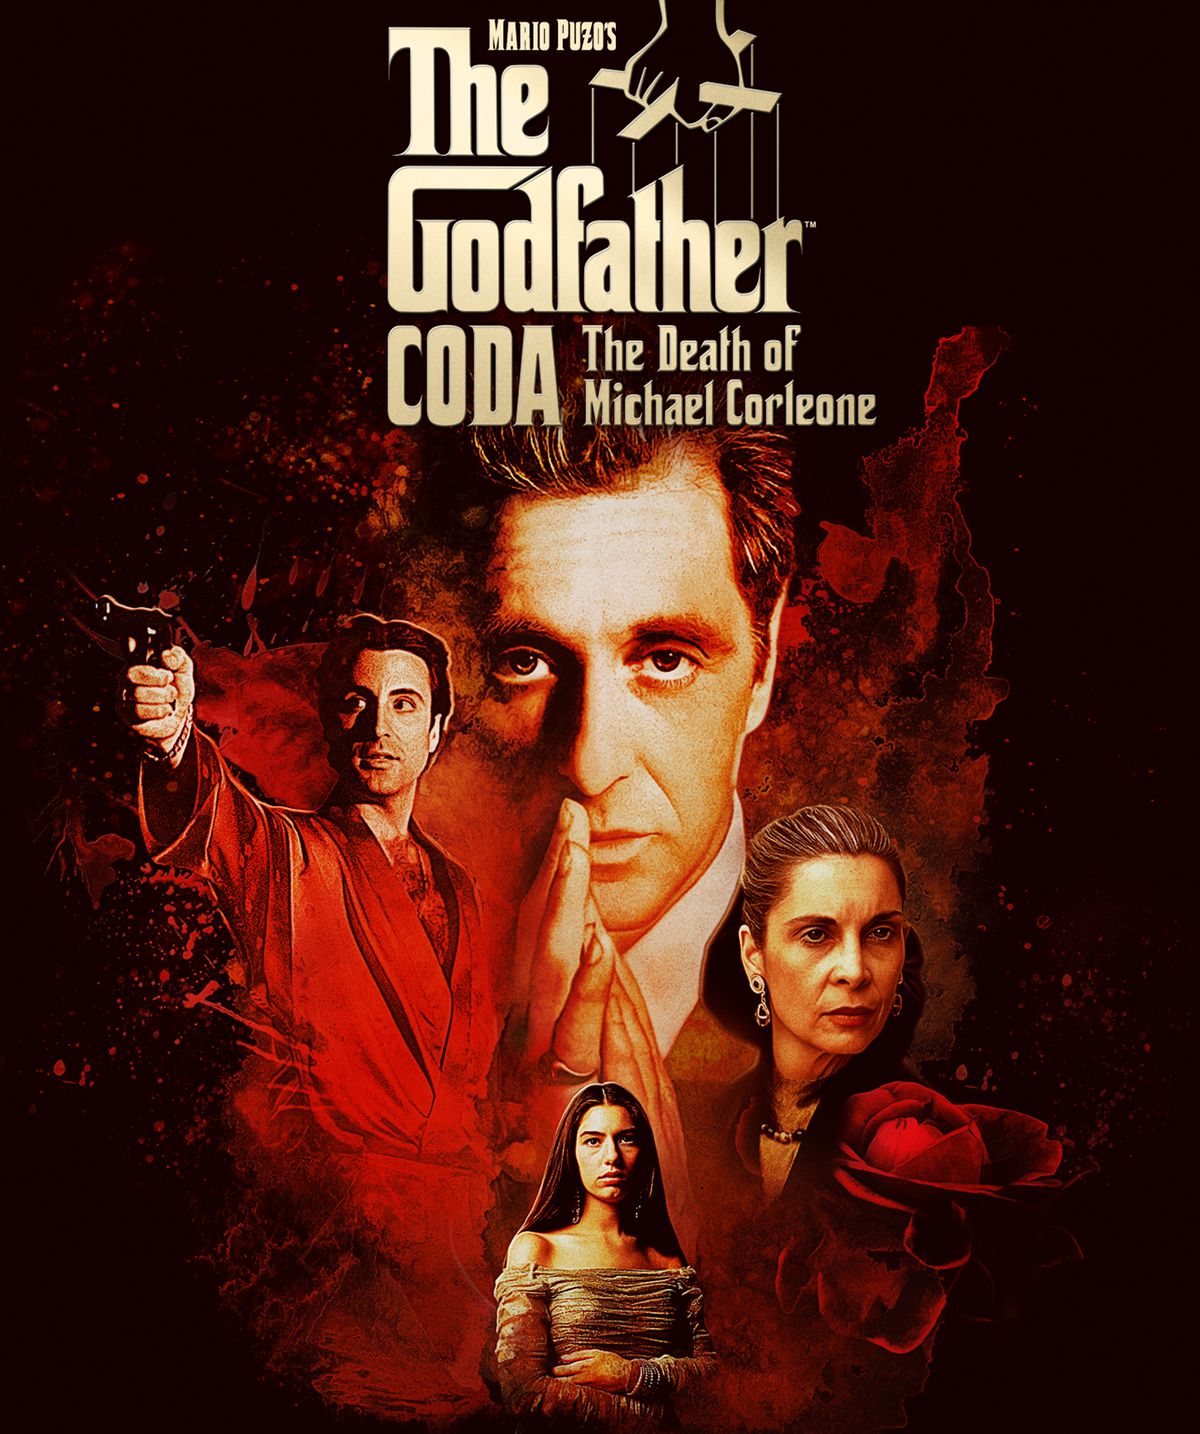 Godfather 3 redigerar om aka The Godfather, Coda: Michael Corleone-affischens död